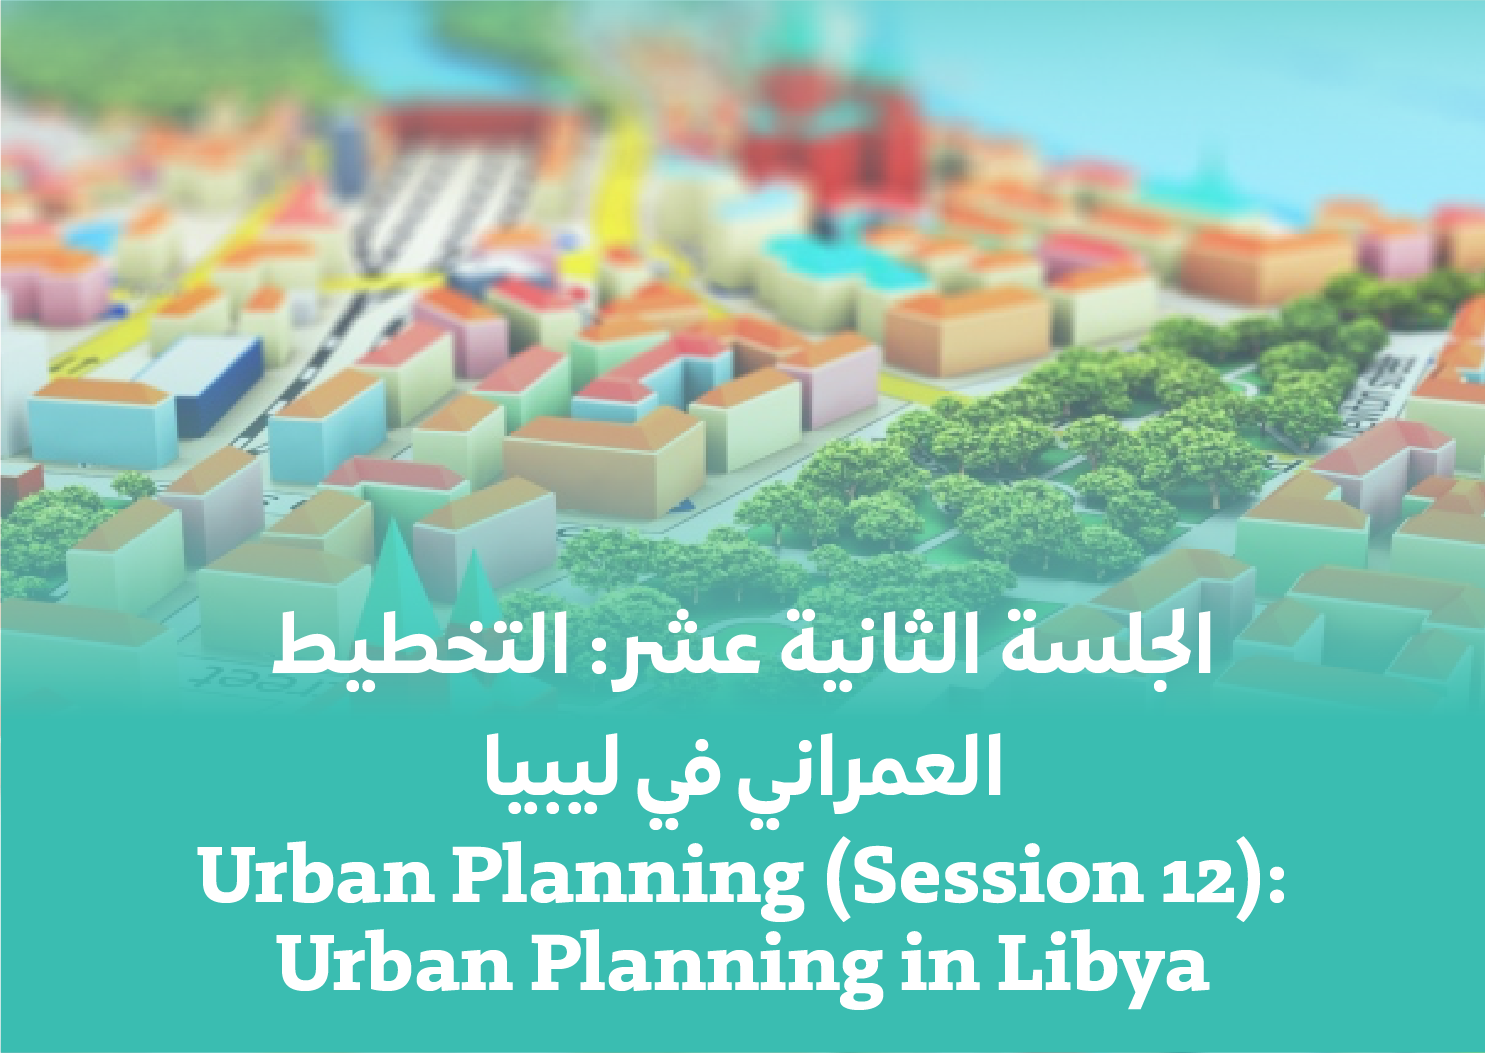 Session 12: Urban Planning in Libya